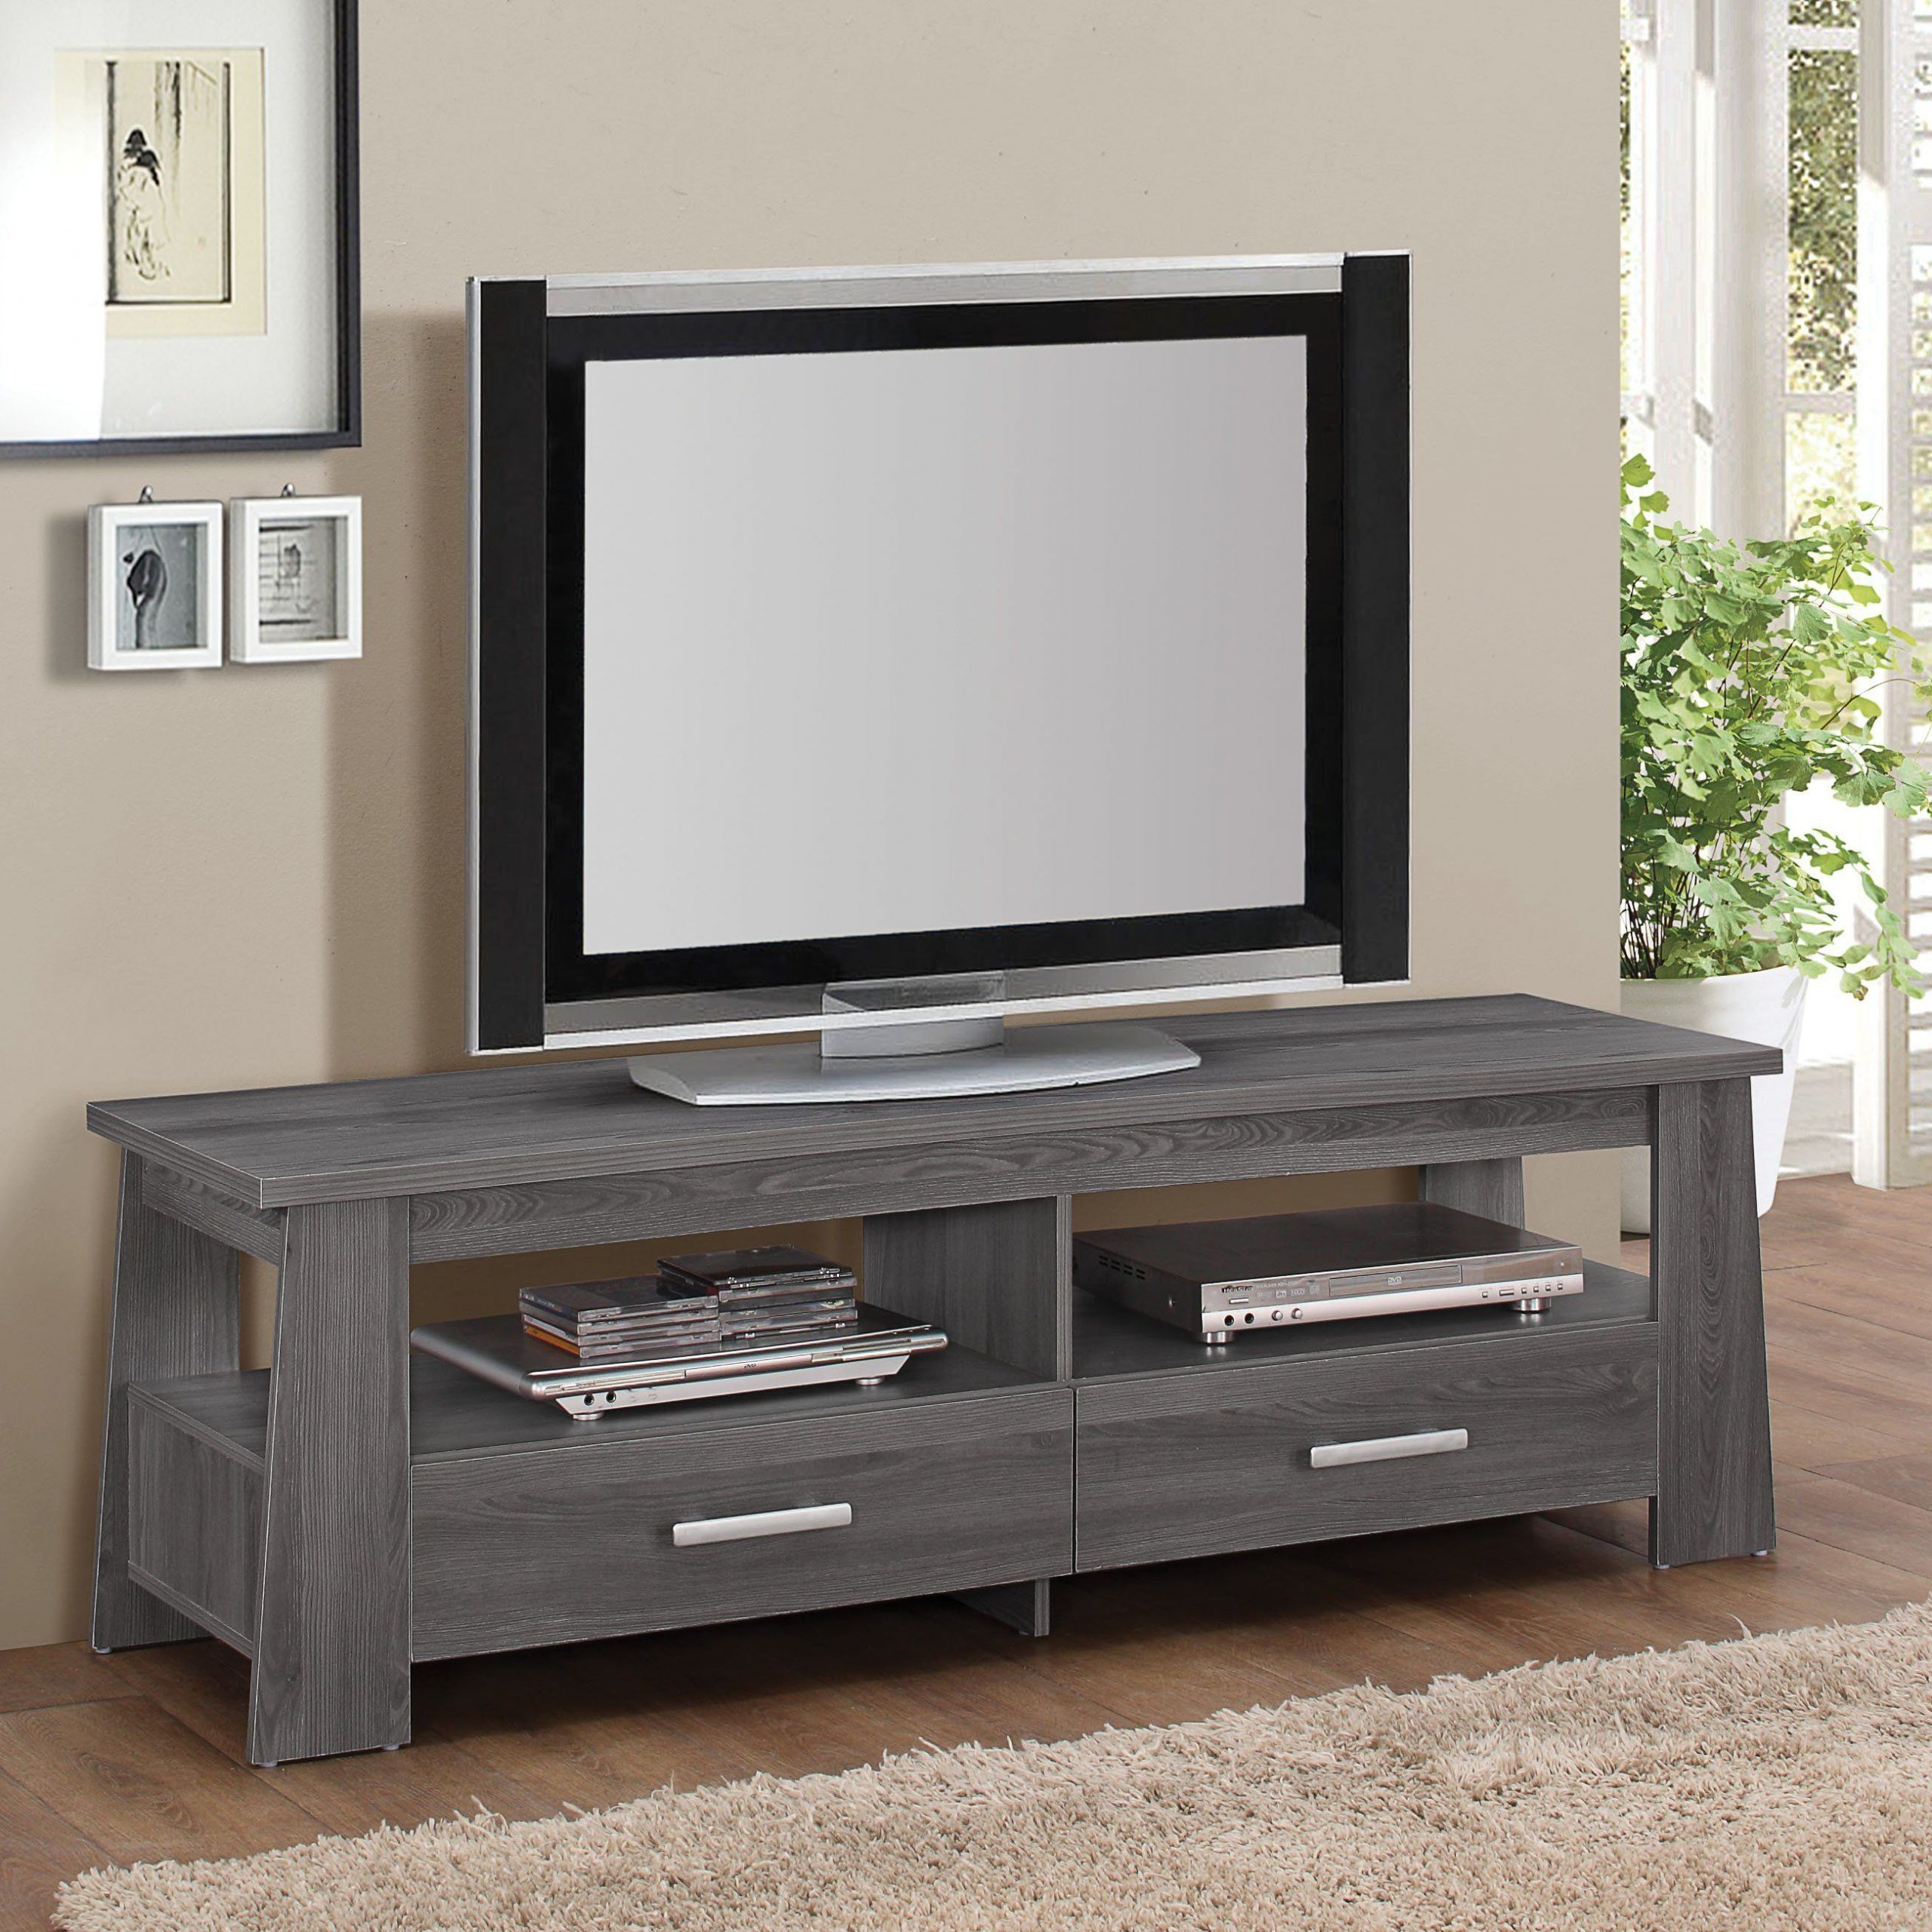 Dark Oak Tv Stands For Flat Screen – Home Ideas For Oak Tv Stands For Flat Screen (View 3 of 15)